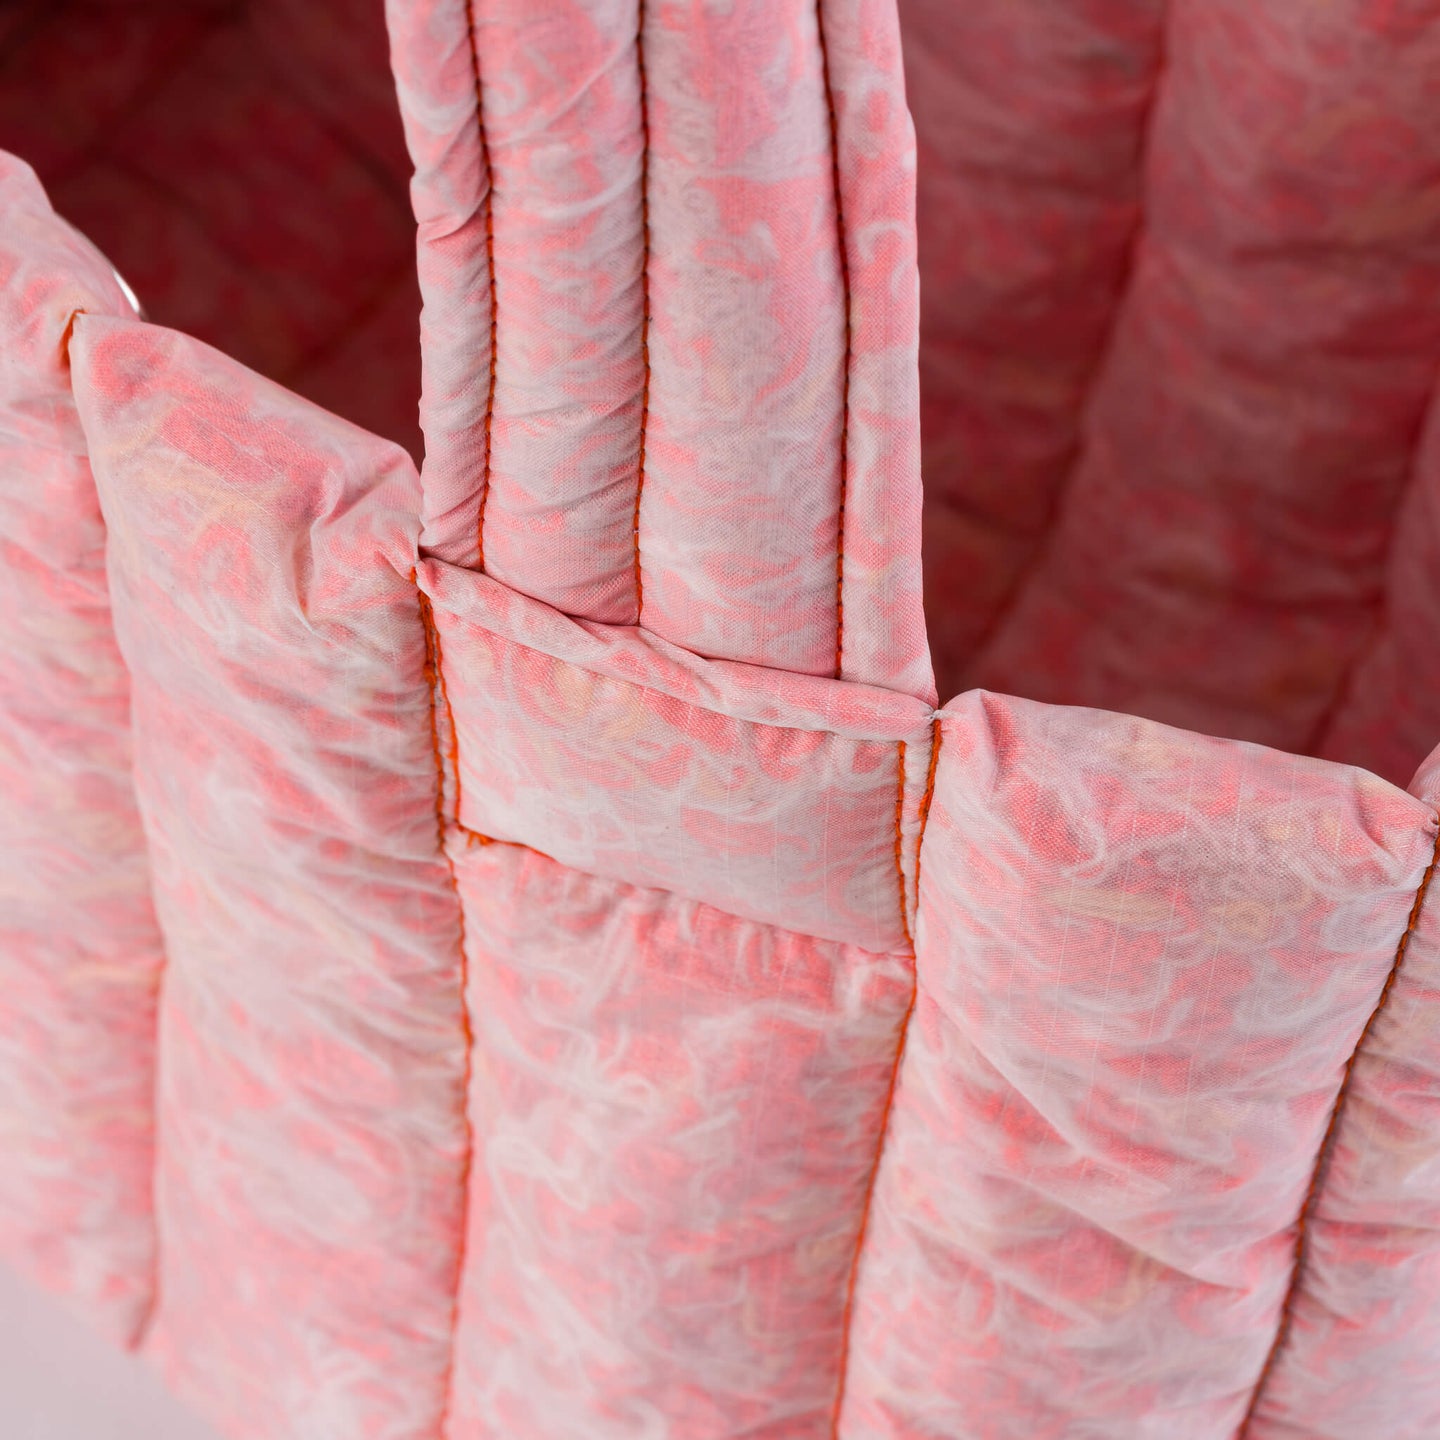 Scrap Stuffed Tote Yarn Wastage Threads Stuffed Multi Color